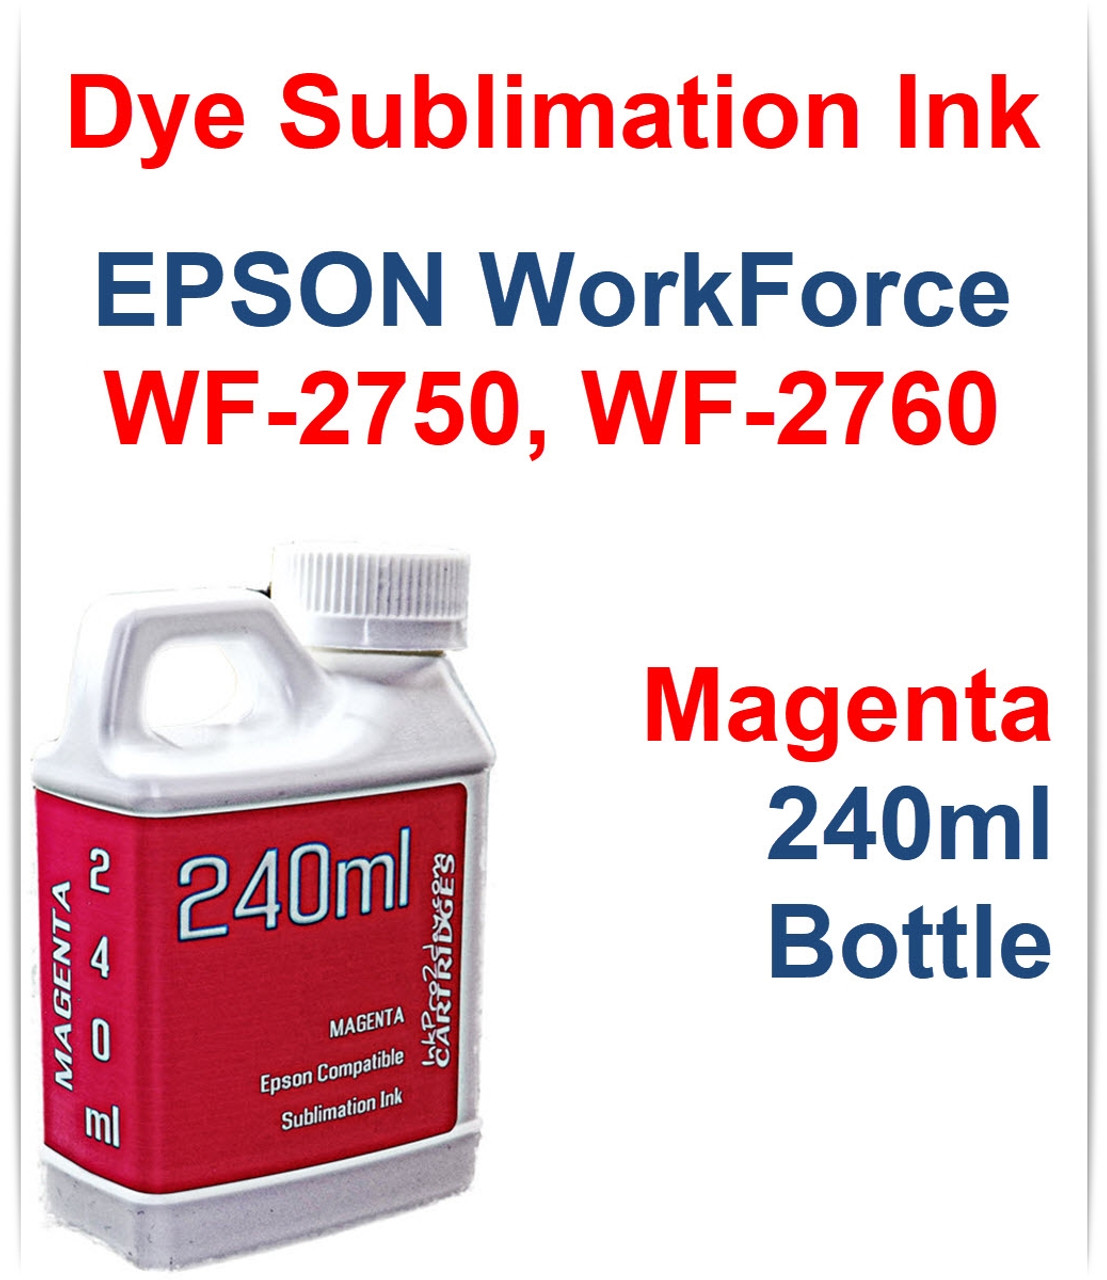 Magenta 240ml bottles Dye Sublimation Ink for Epson WorkForce WF-2750 WF-2760 Printers